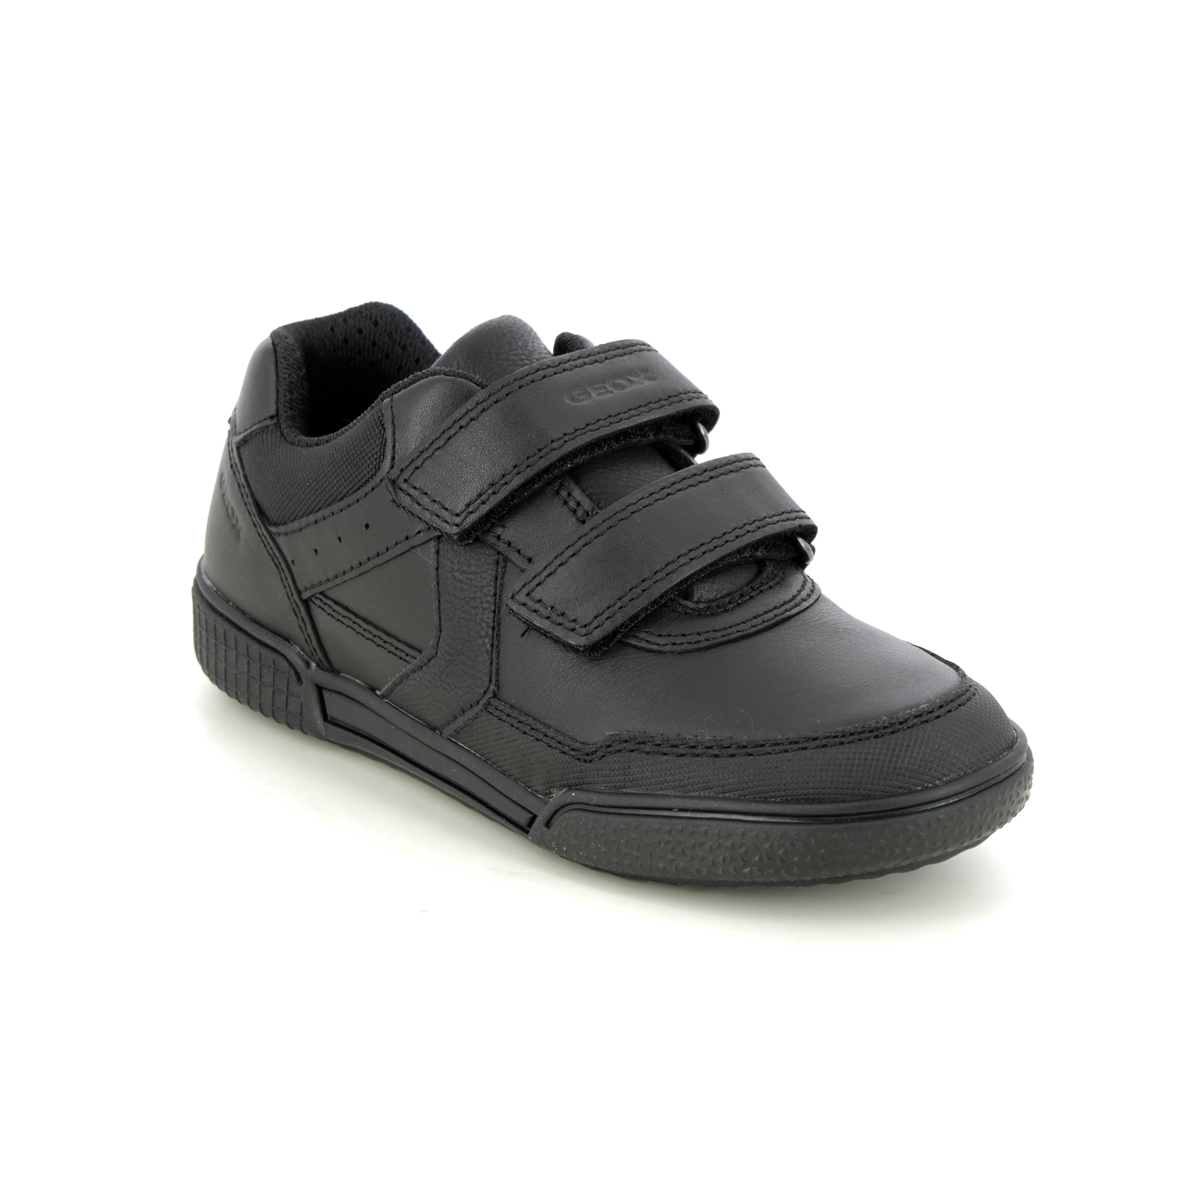 Geox - Poseido Boy 2V (Black Leather) J02Bca-C9999 In Size 33 In Plain Black Leather For School For kids